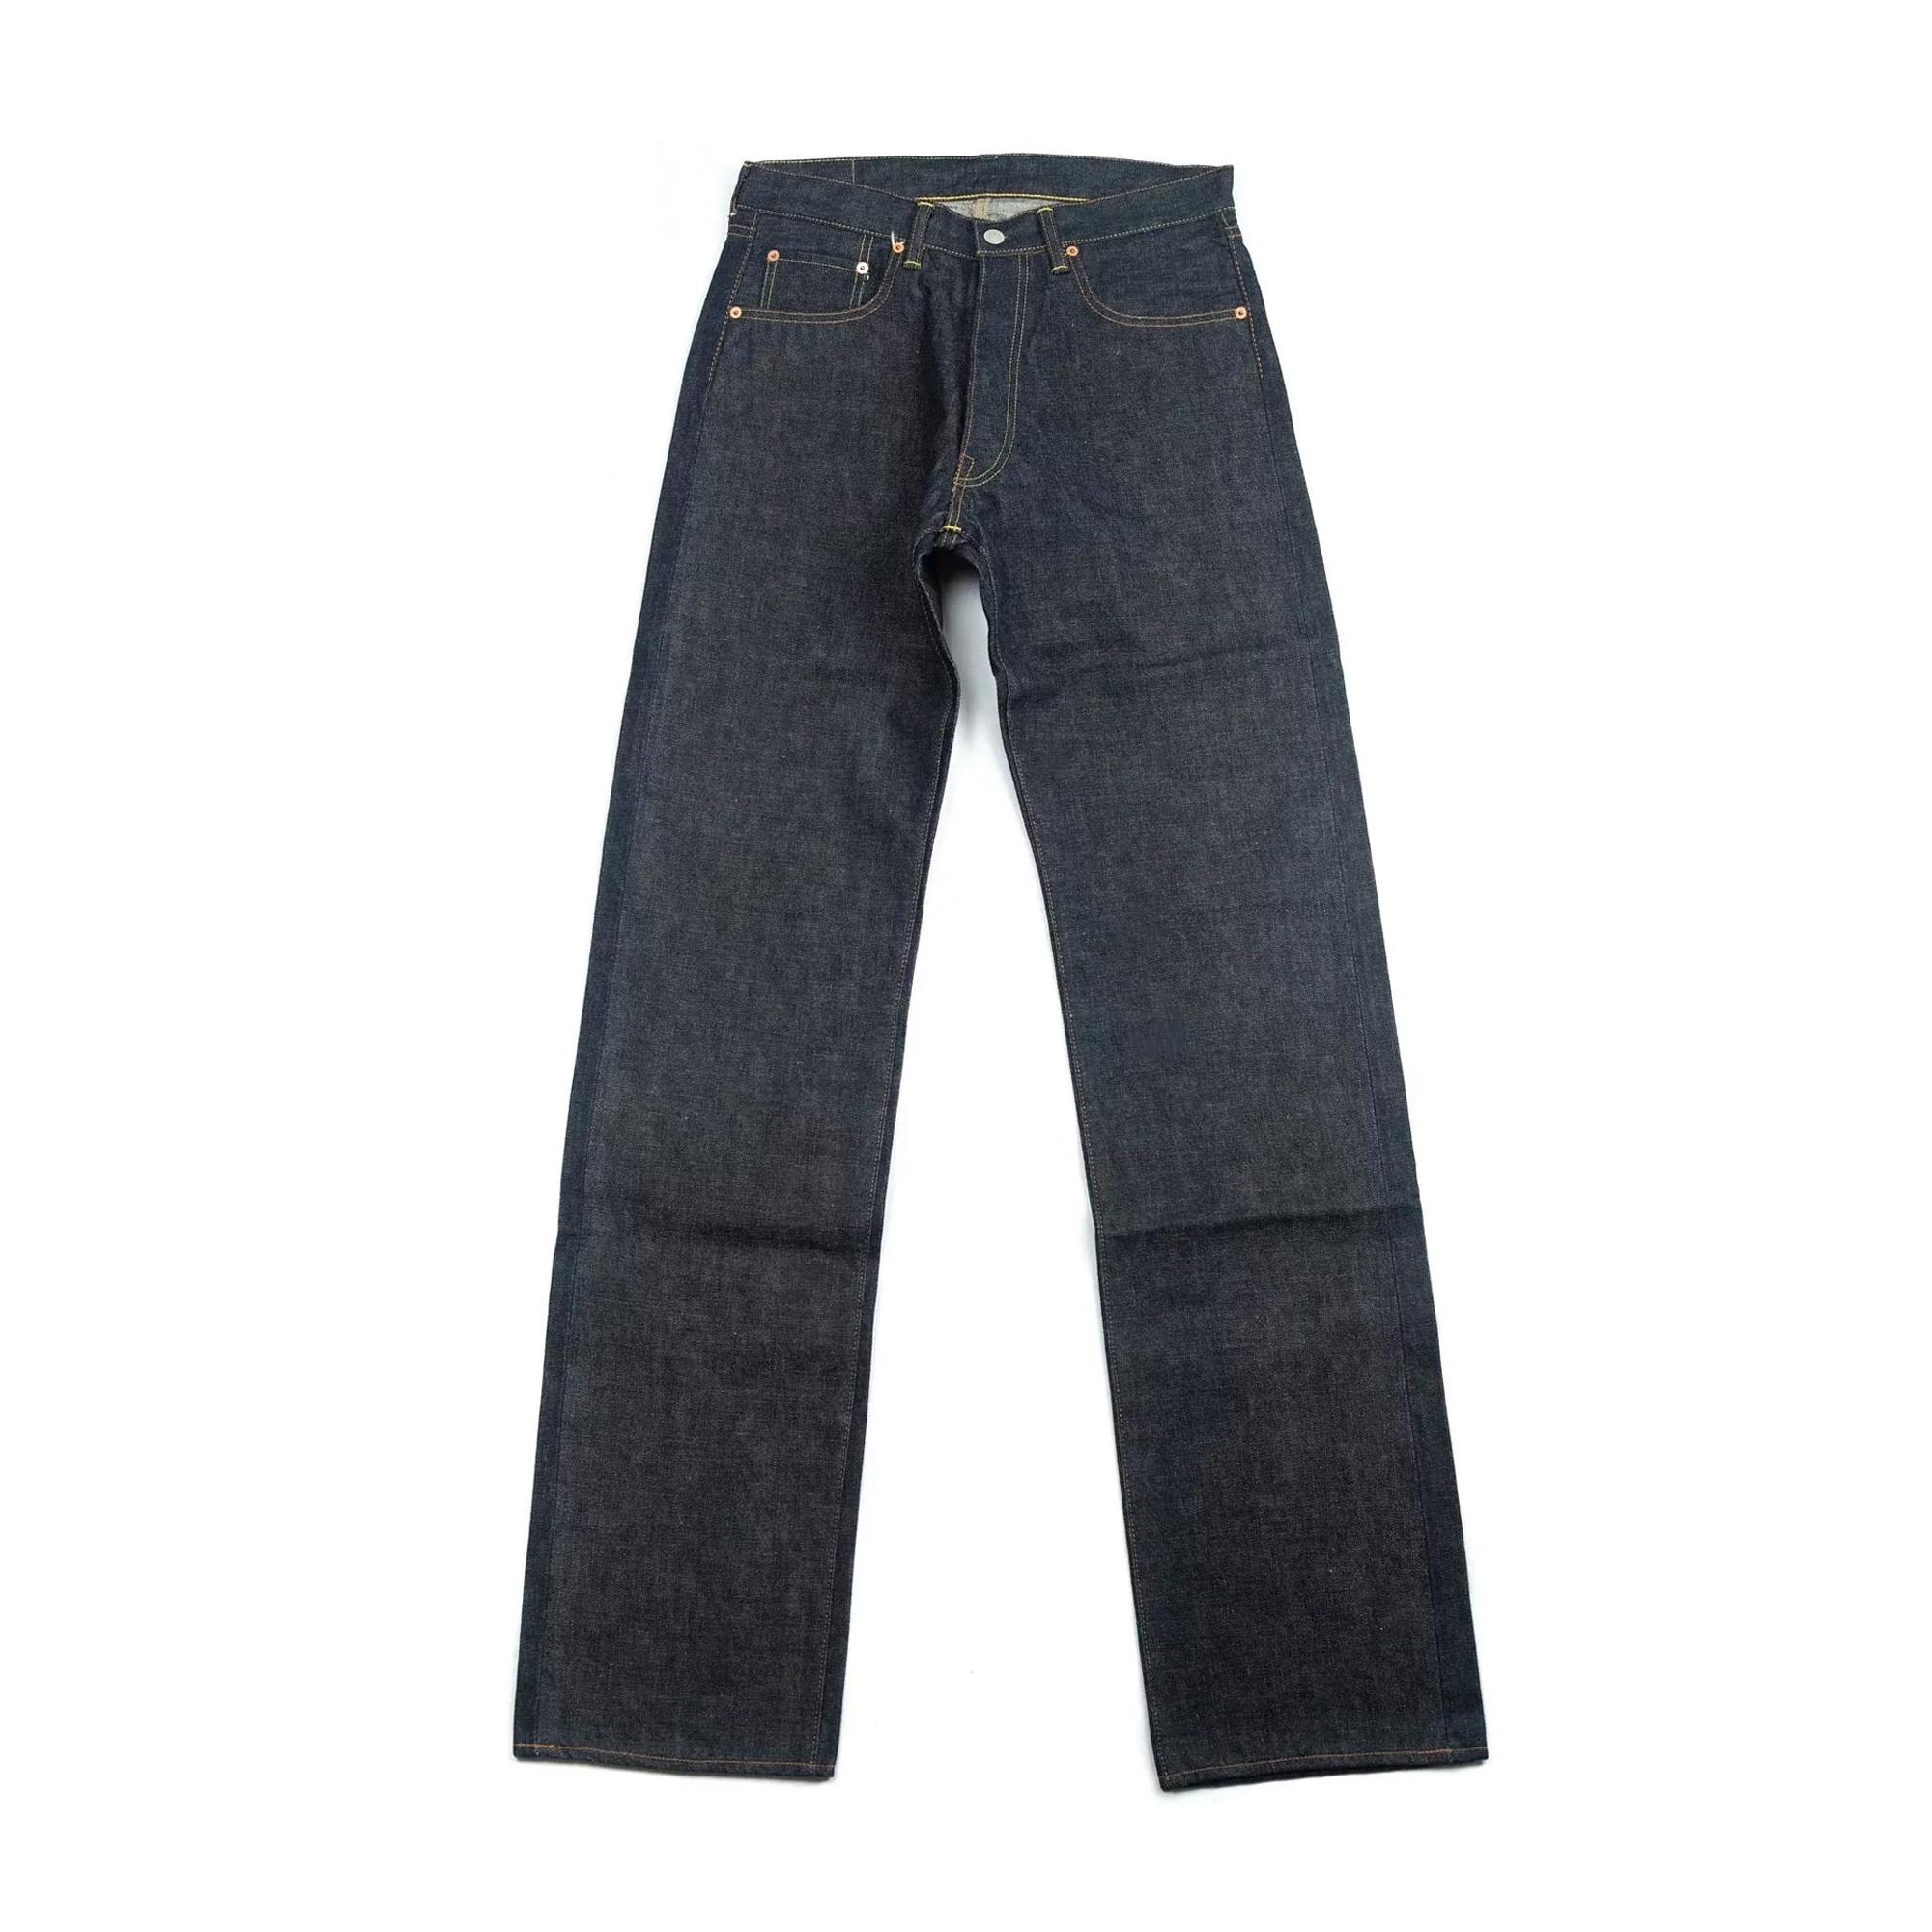 TCB Jeans - 50's Jeans (Indigo)